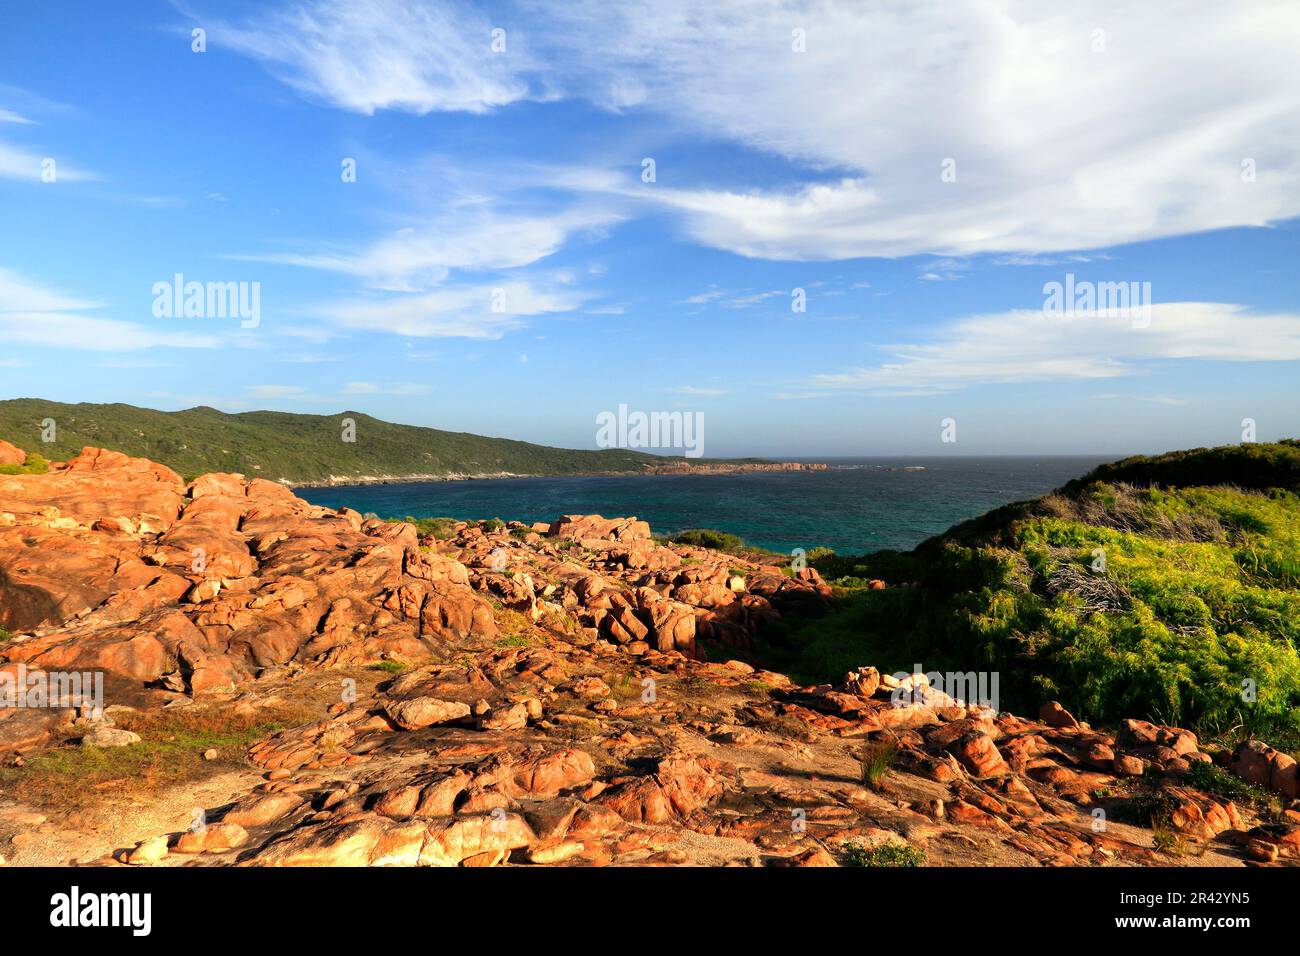 Rocky coastline, Cape Hamelin, Southwest Australia Stock Photo